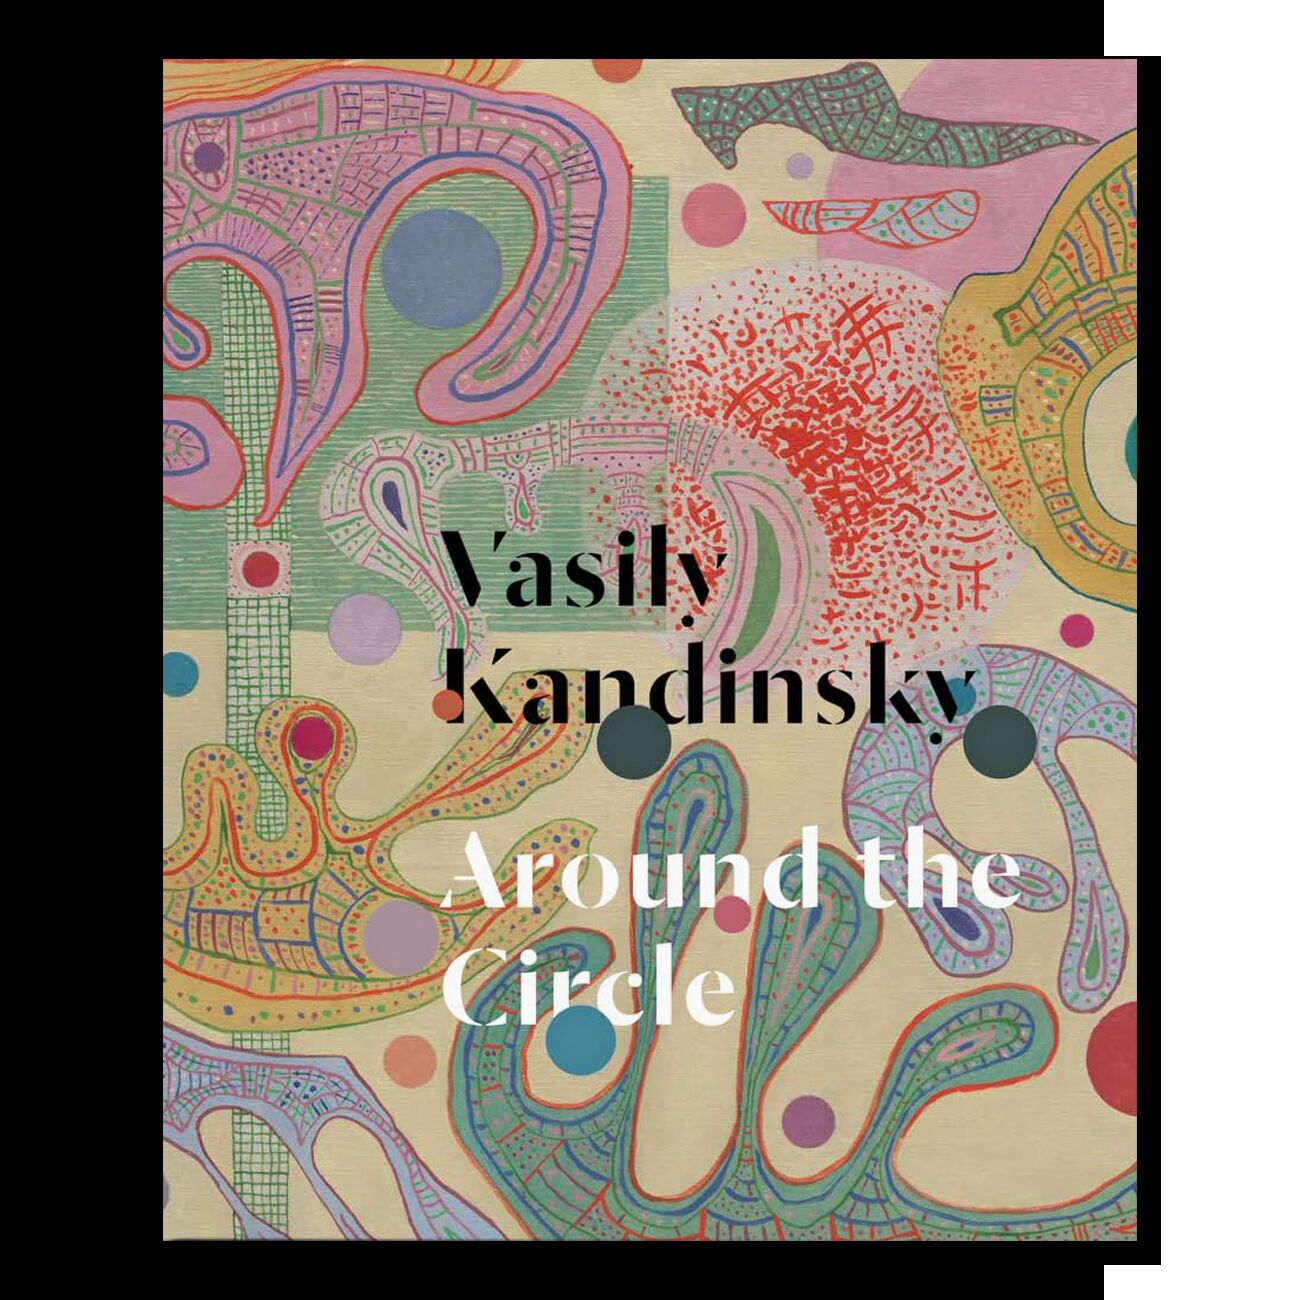 Vasily Kandinsky. Around the Circle